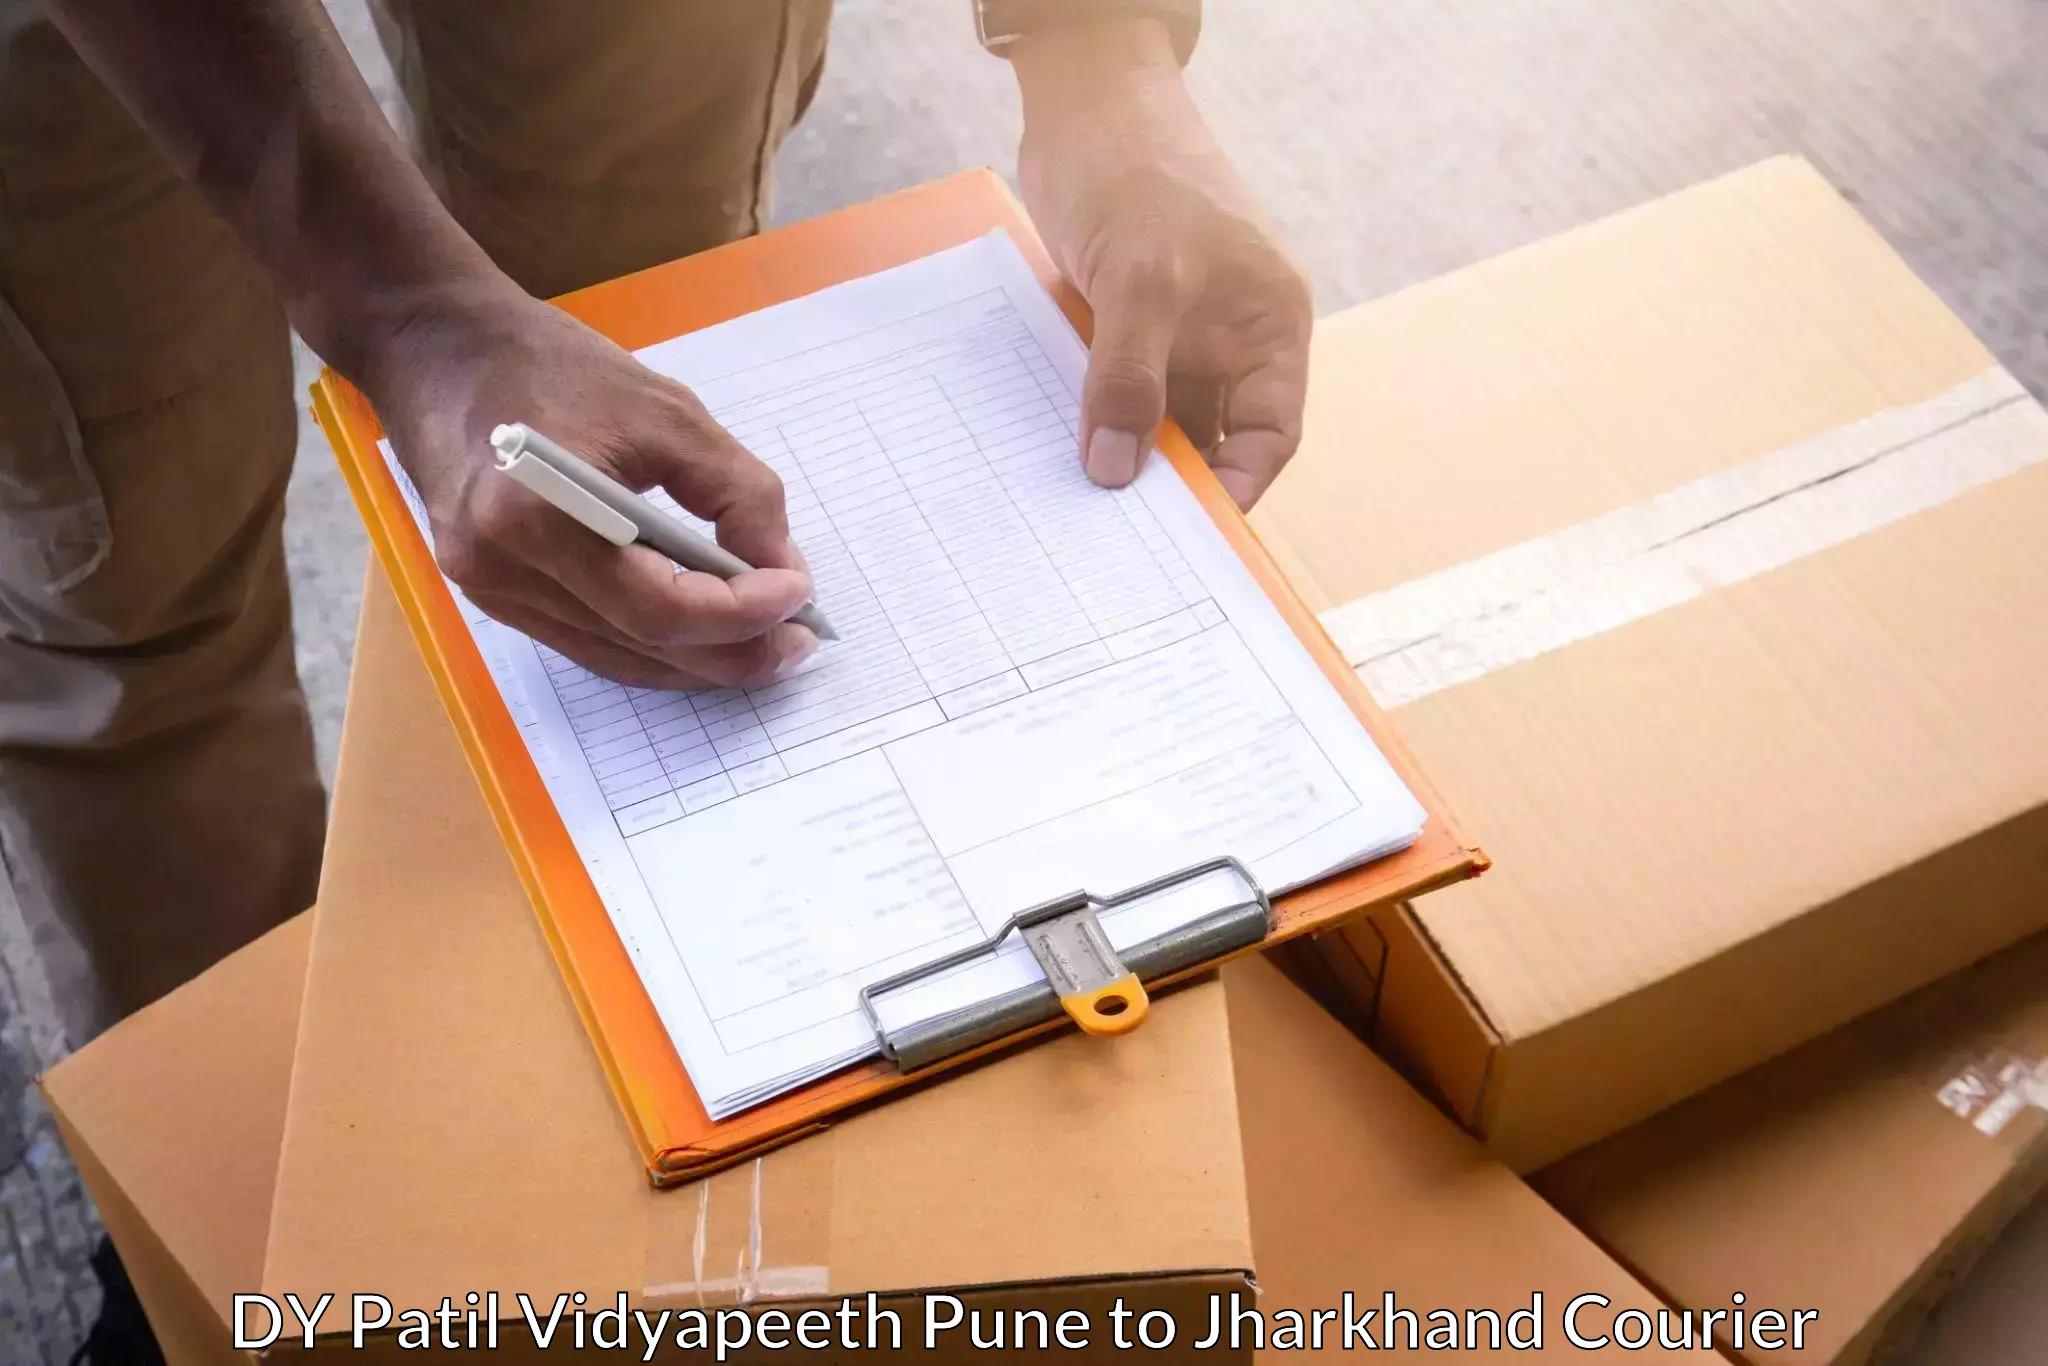 Express package handling DY Patil Vidyapeeth Pune to Bagodar